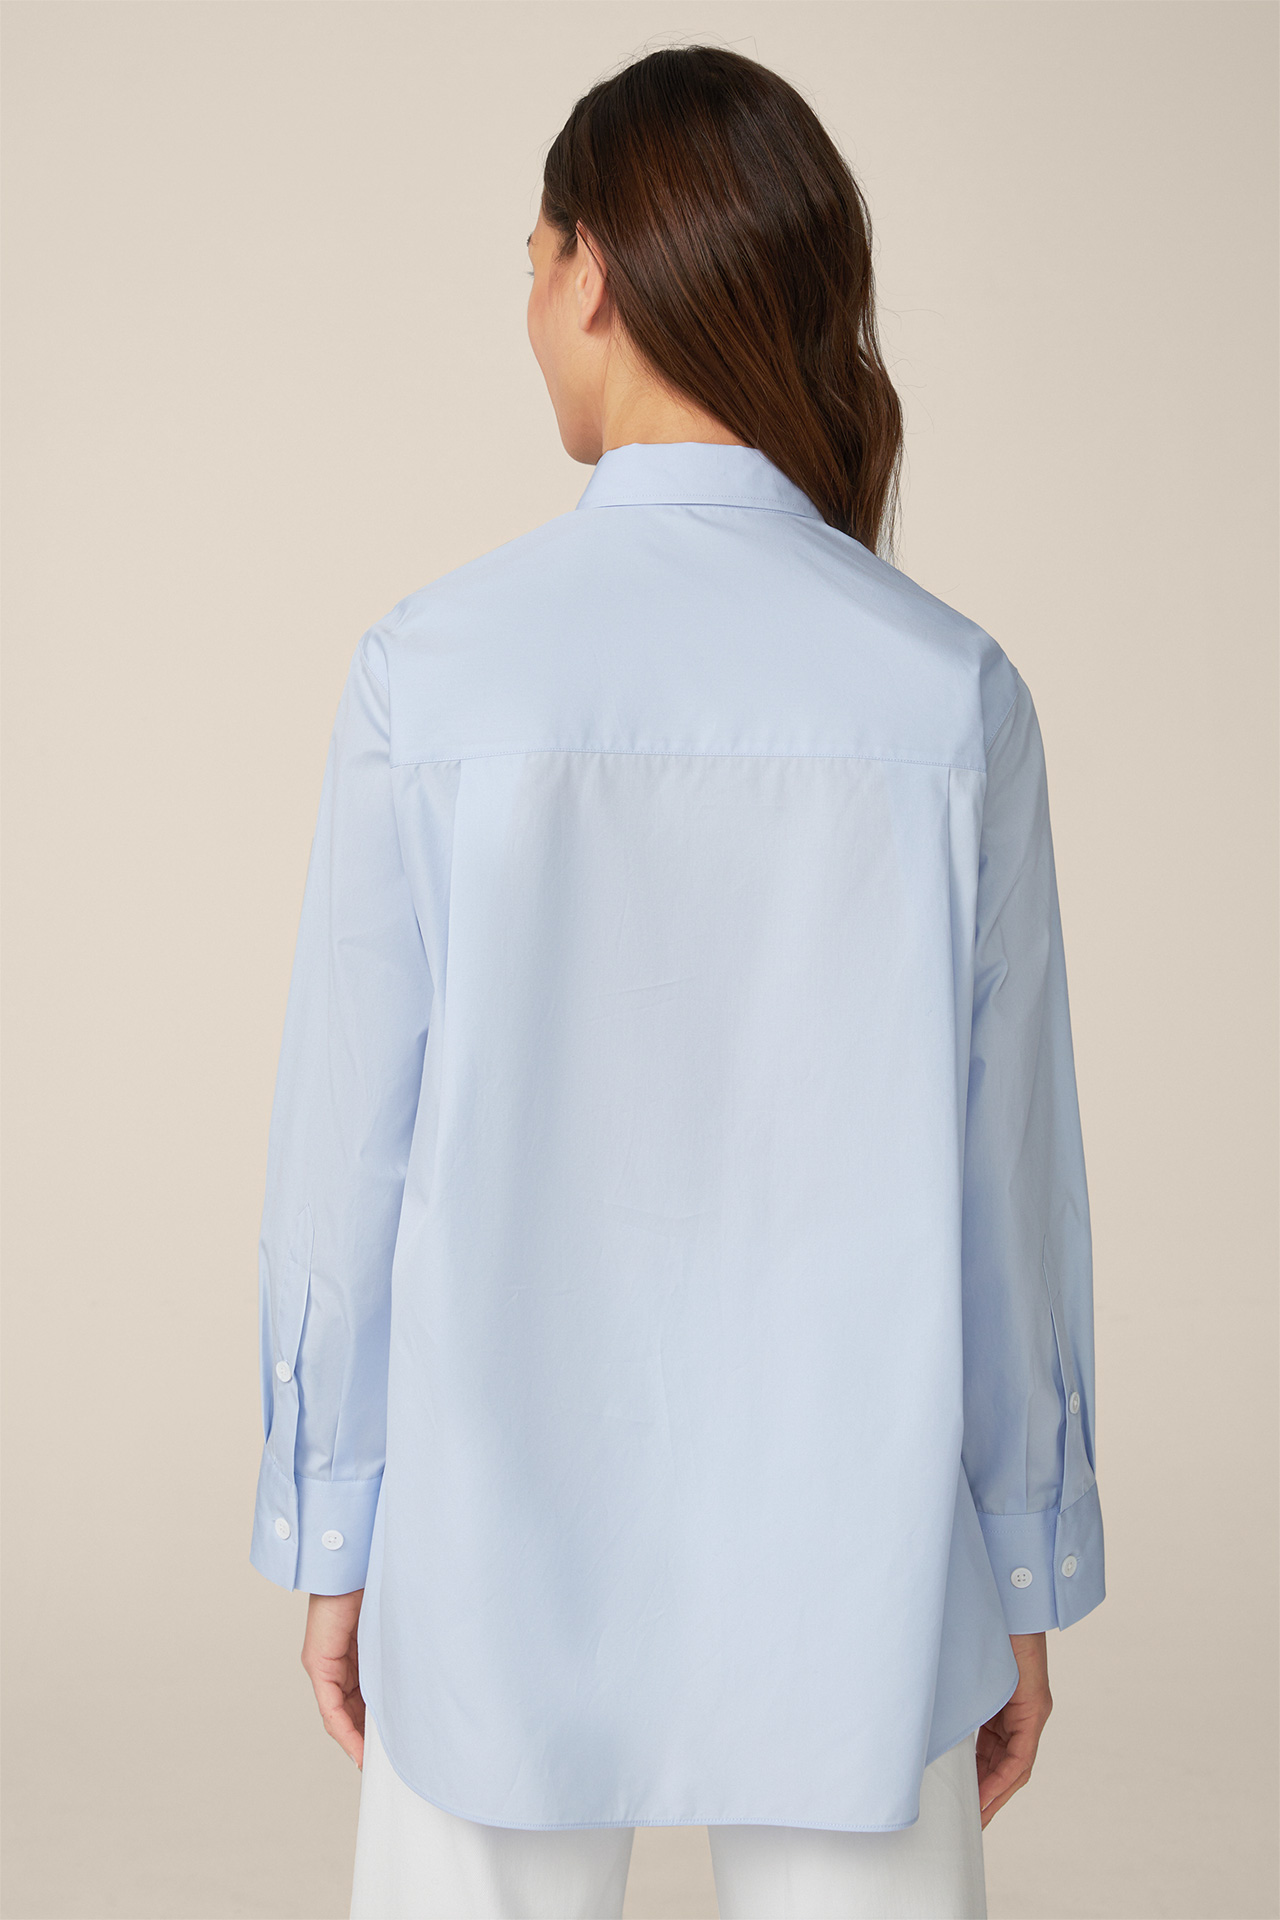 Poplin Cotton Shirt-style Blouse in Light Blue